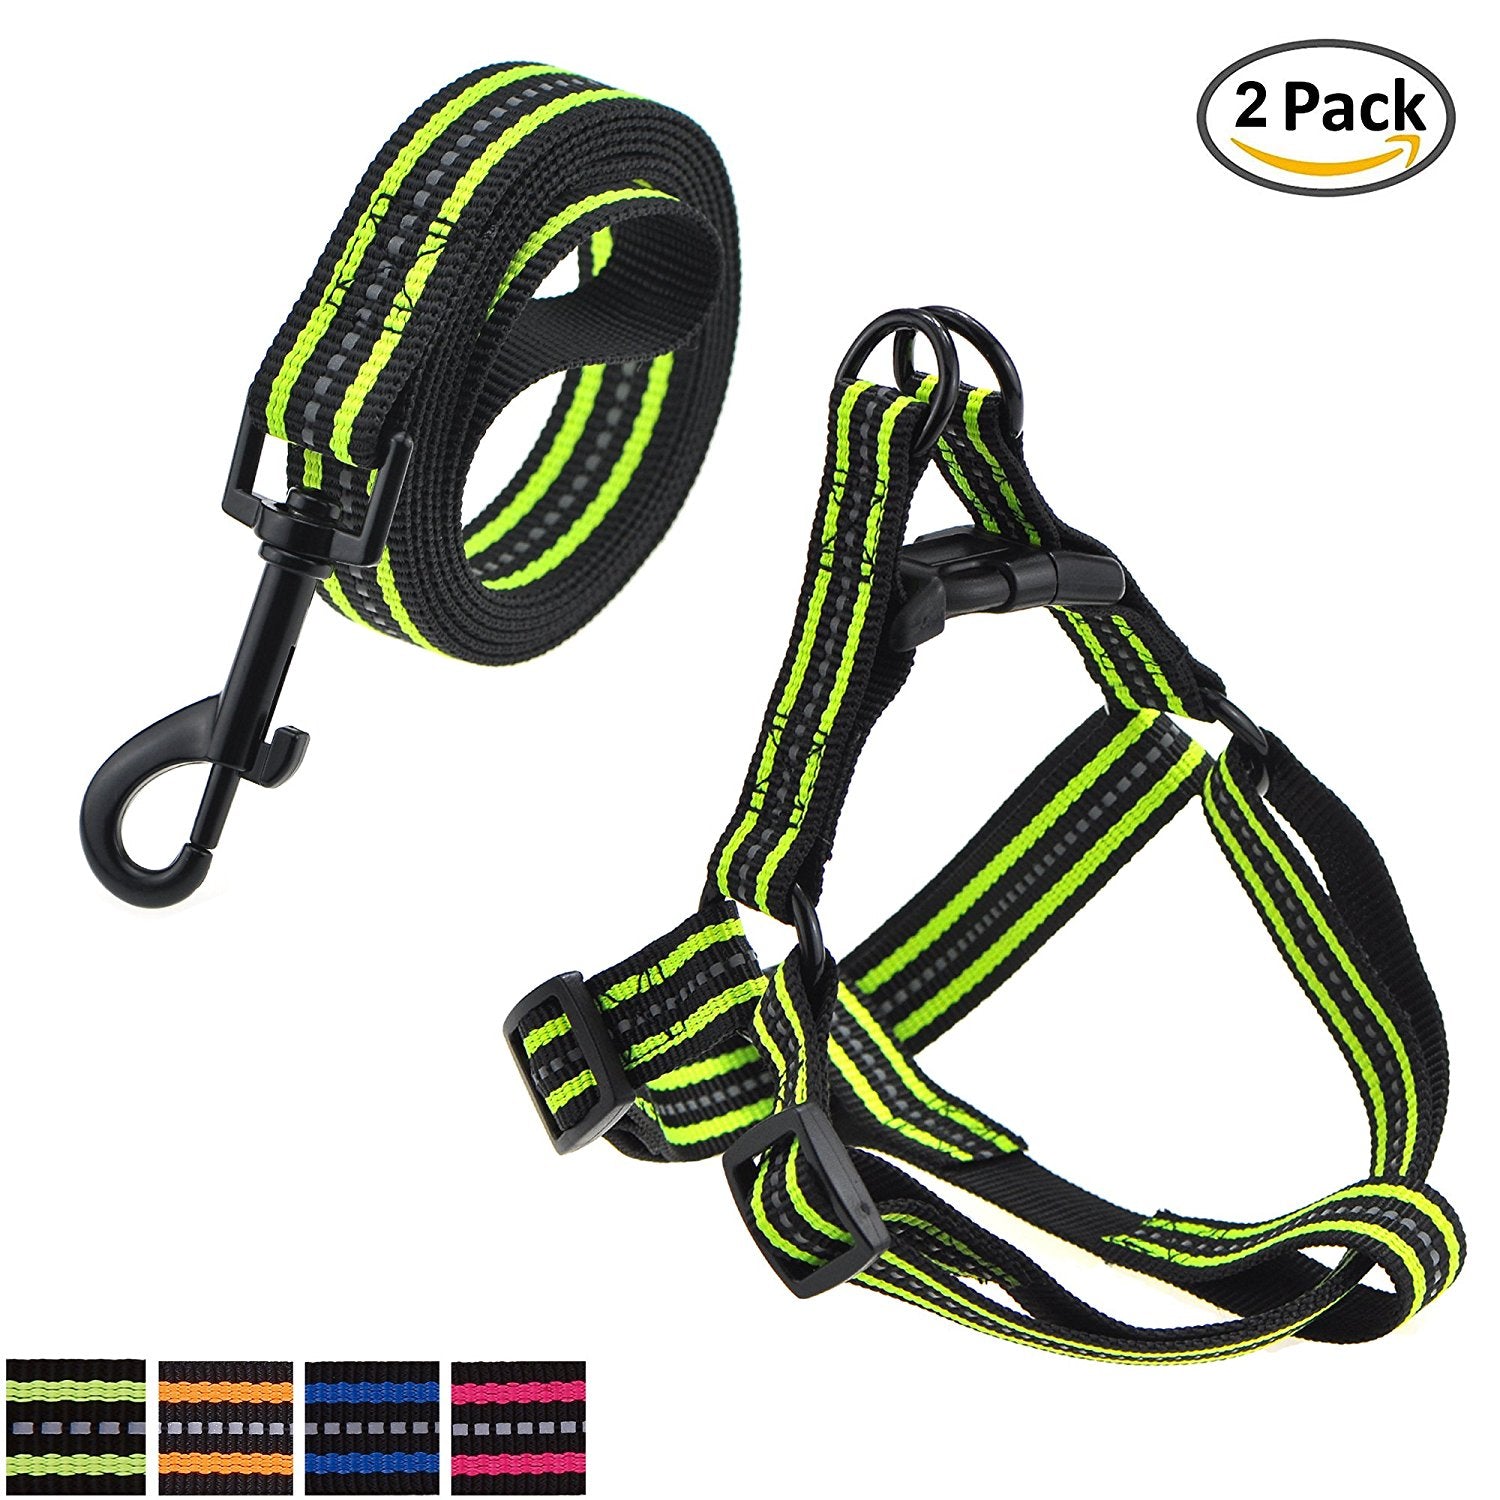 Nylon dog leash collar and harness